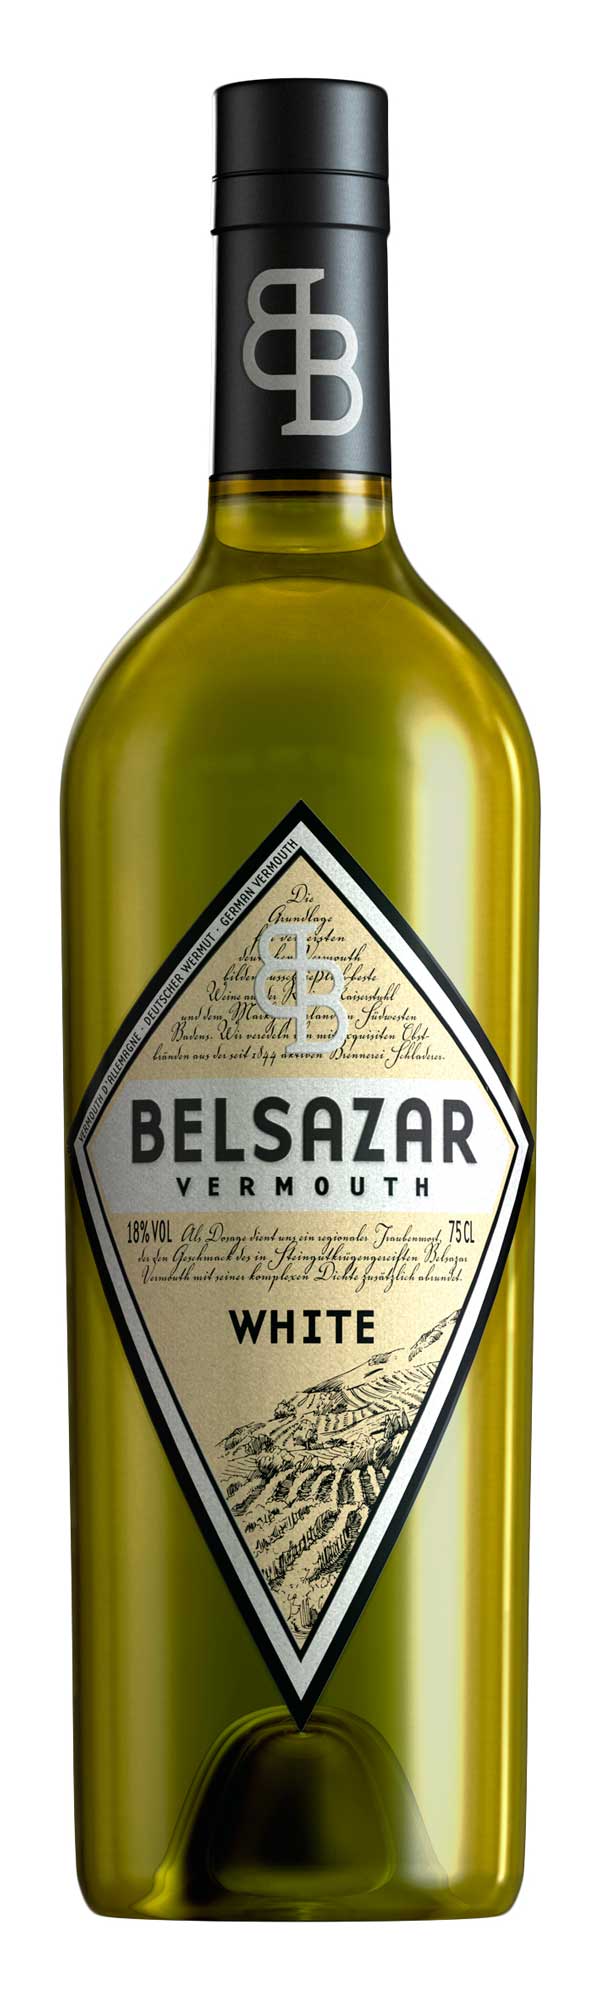 75cl, White, alc. 18% Drinkshop - Belsazar Vermouth